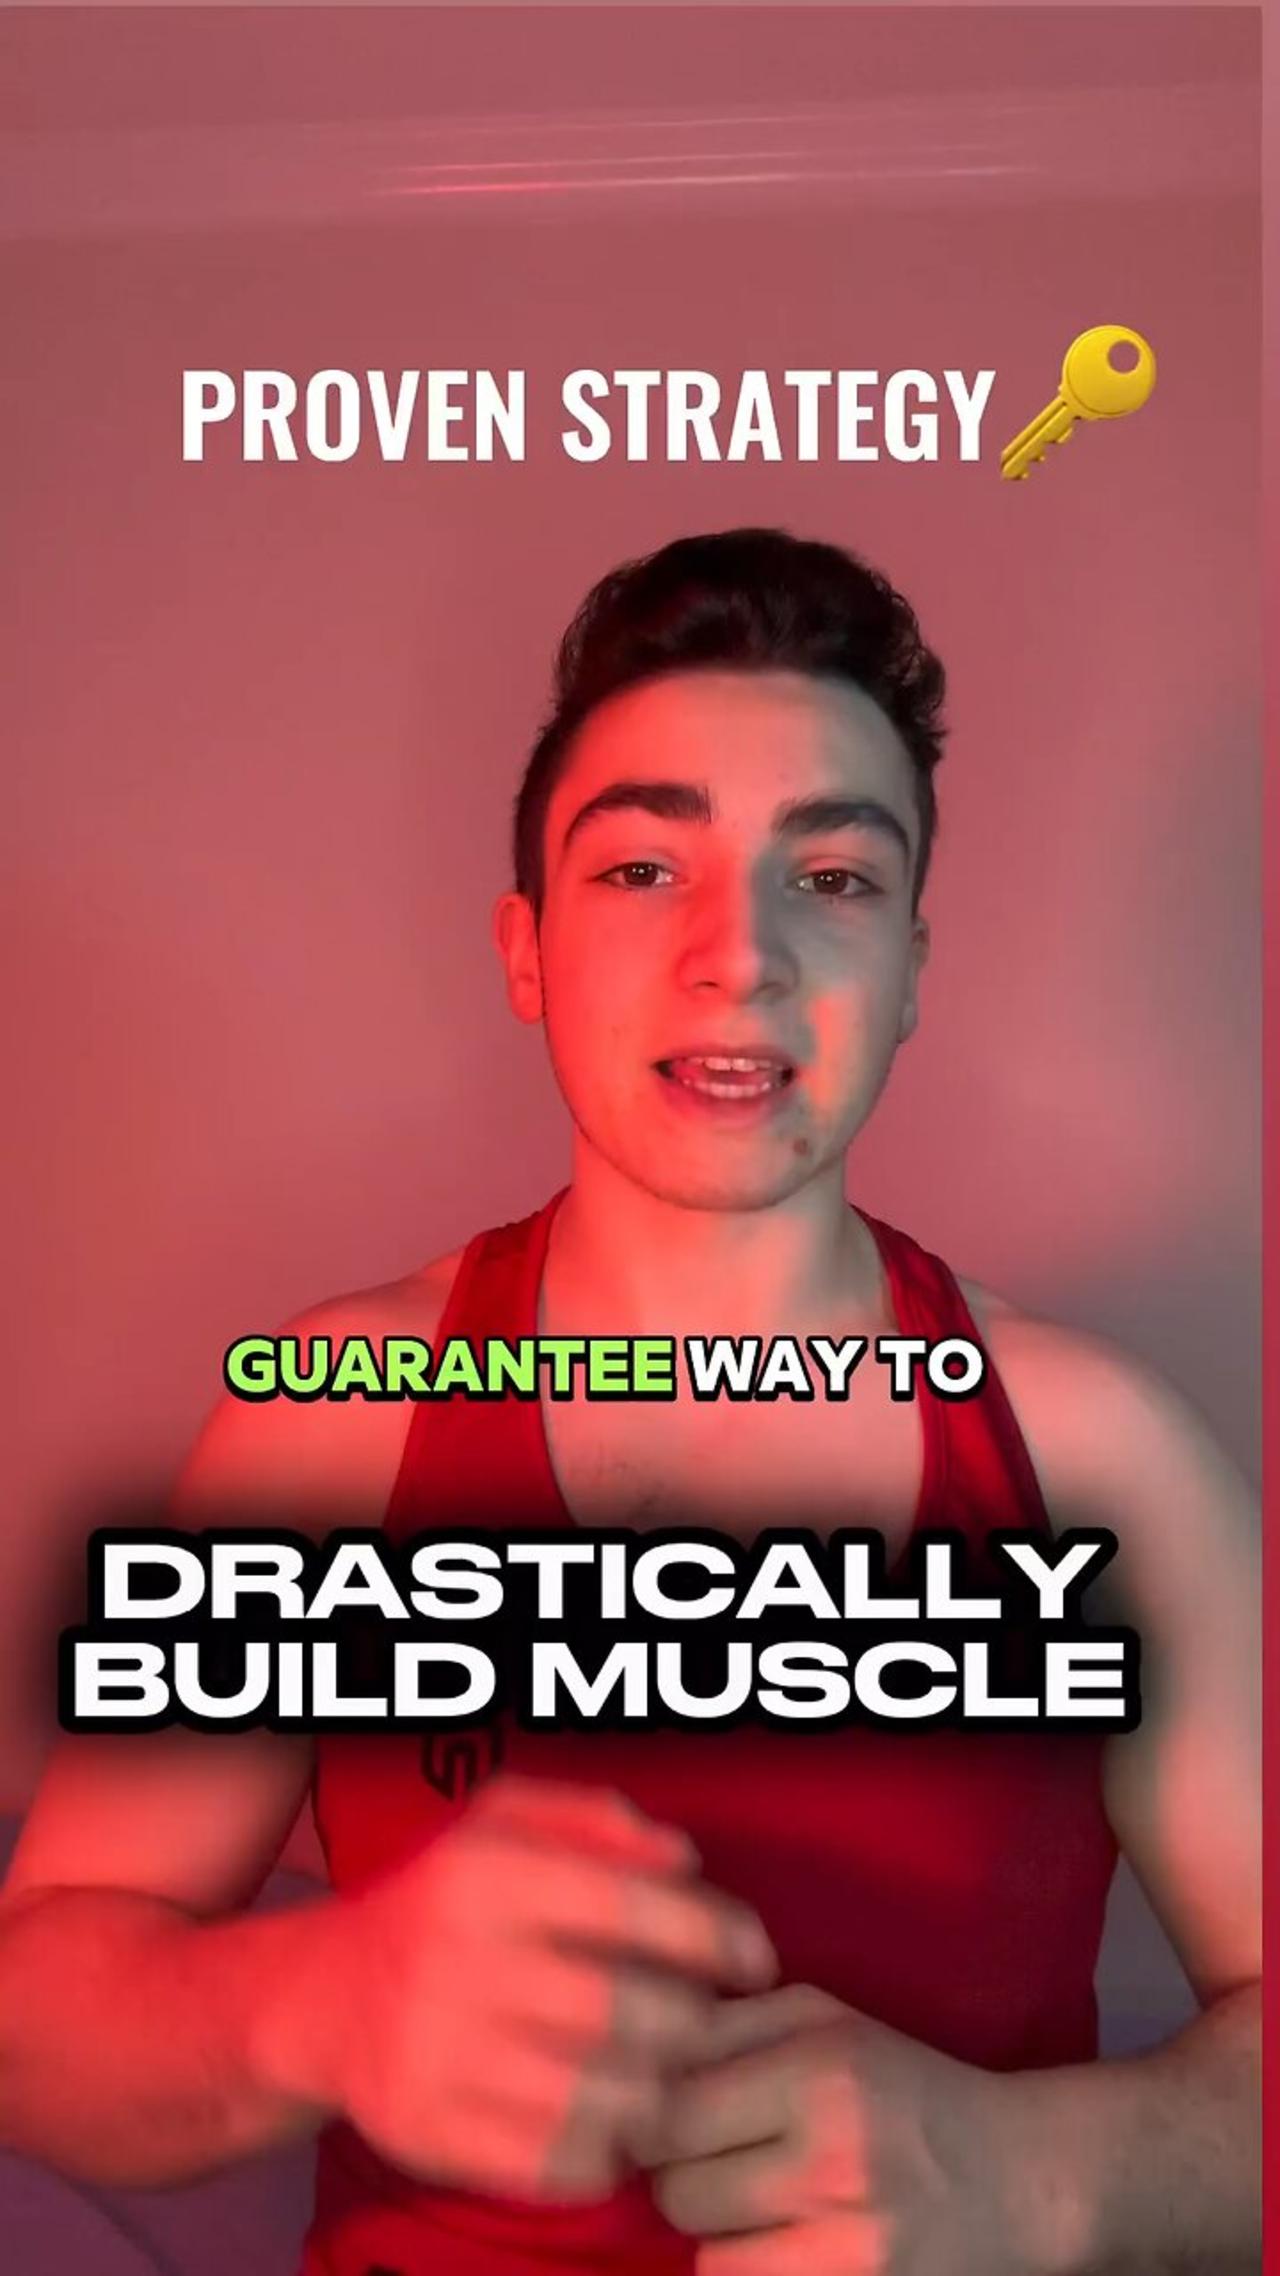 Increase muscle mass